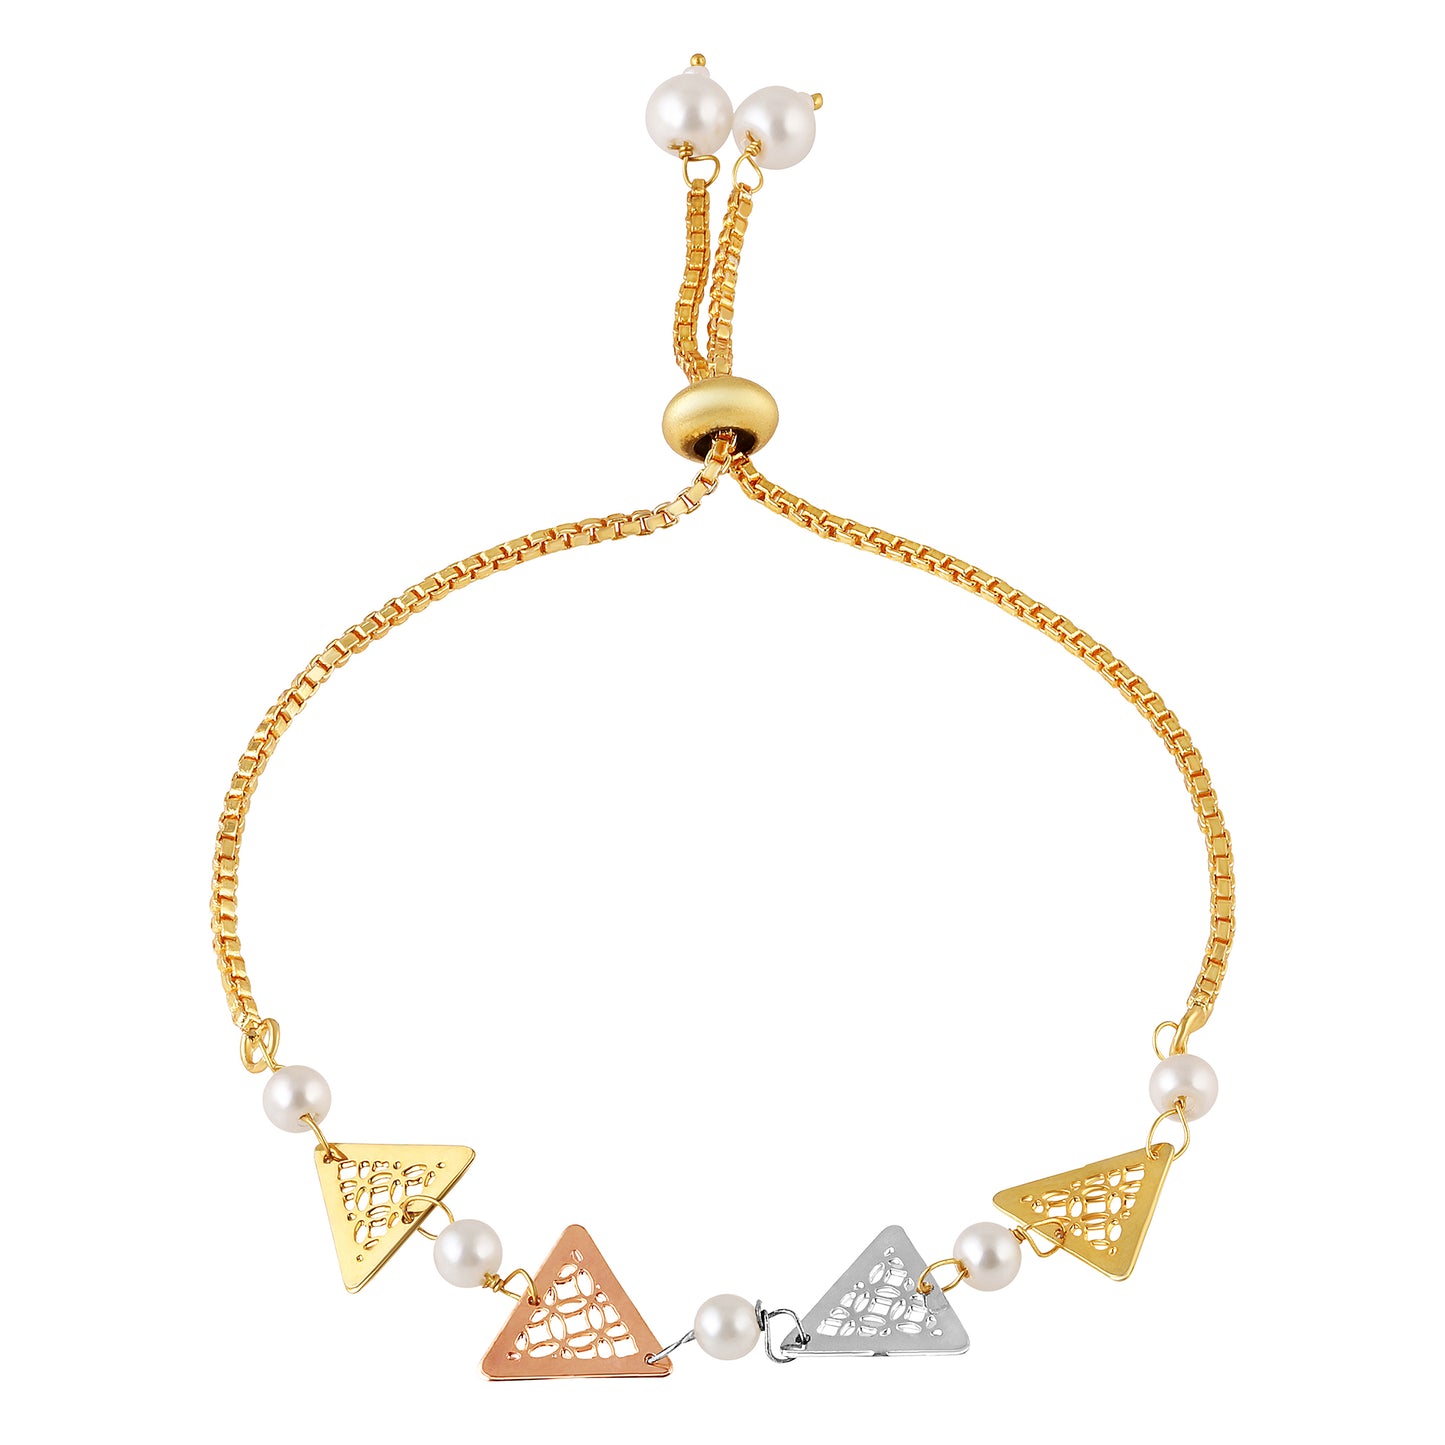 Bdiva 18K Gold Plated Light Weight Triangle Bracelet